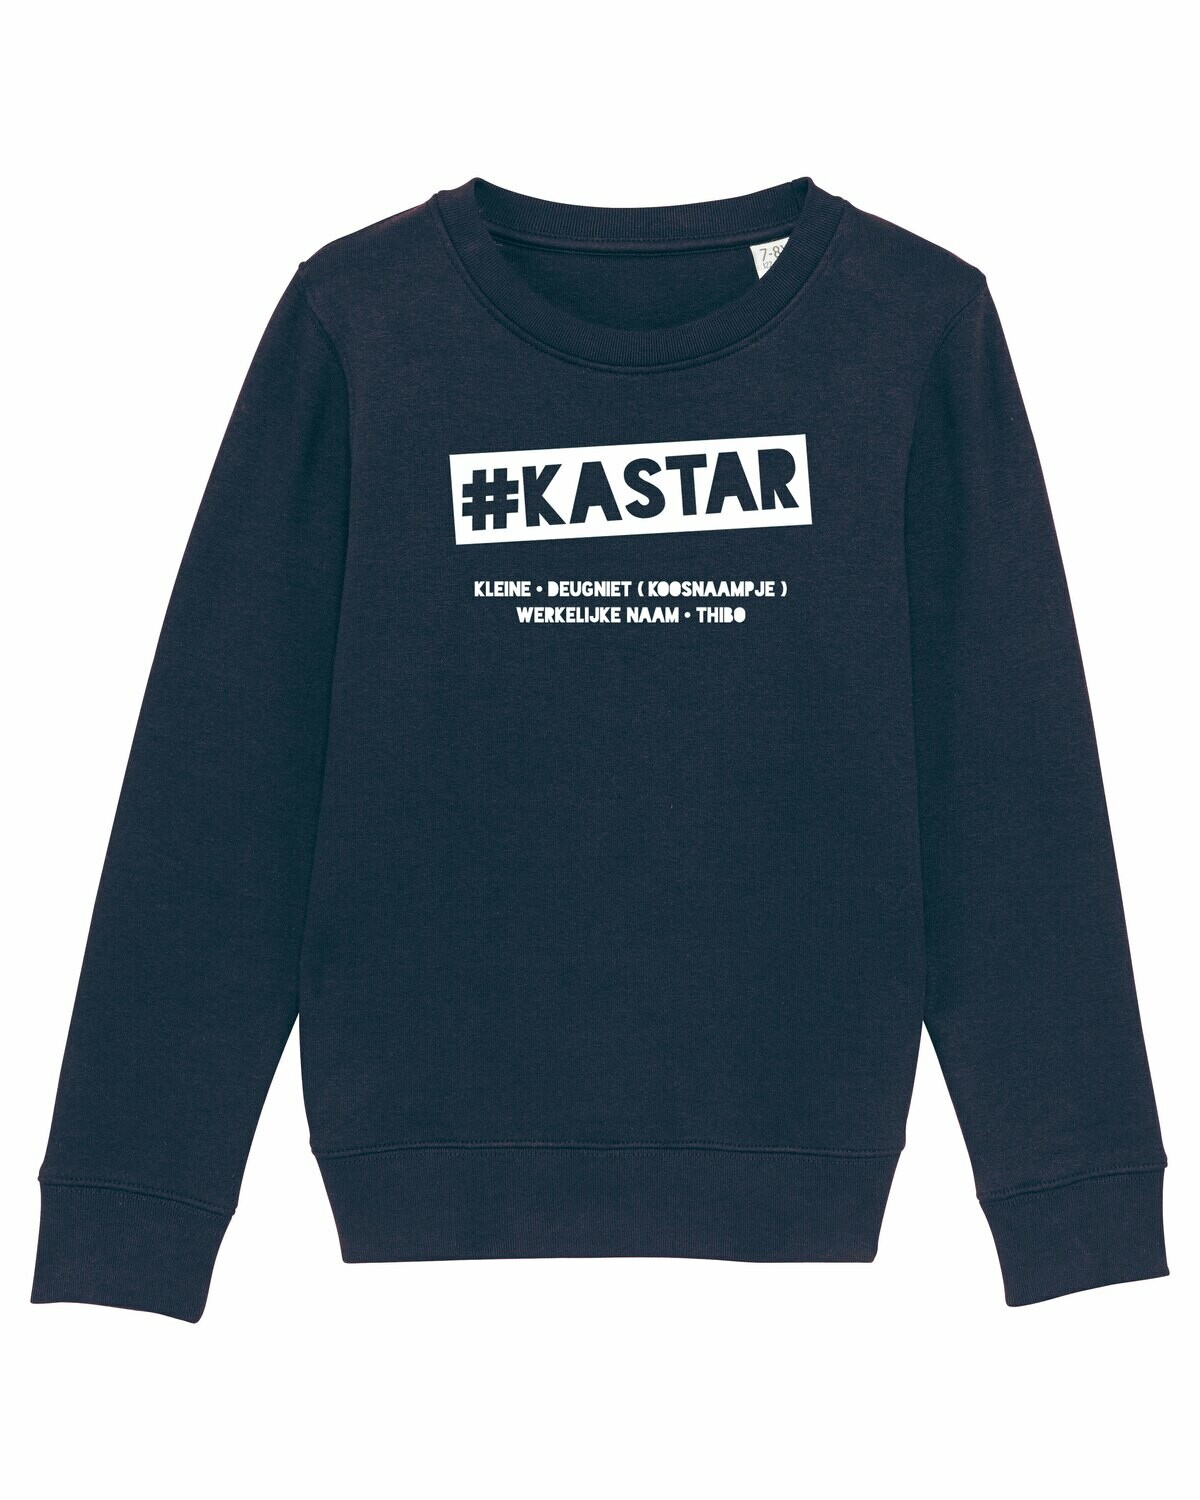 Kids Sweater #Kastar